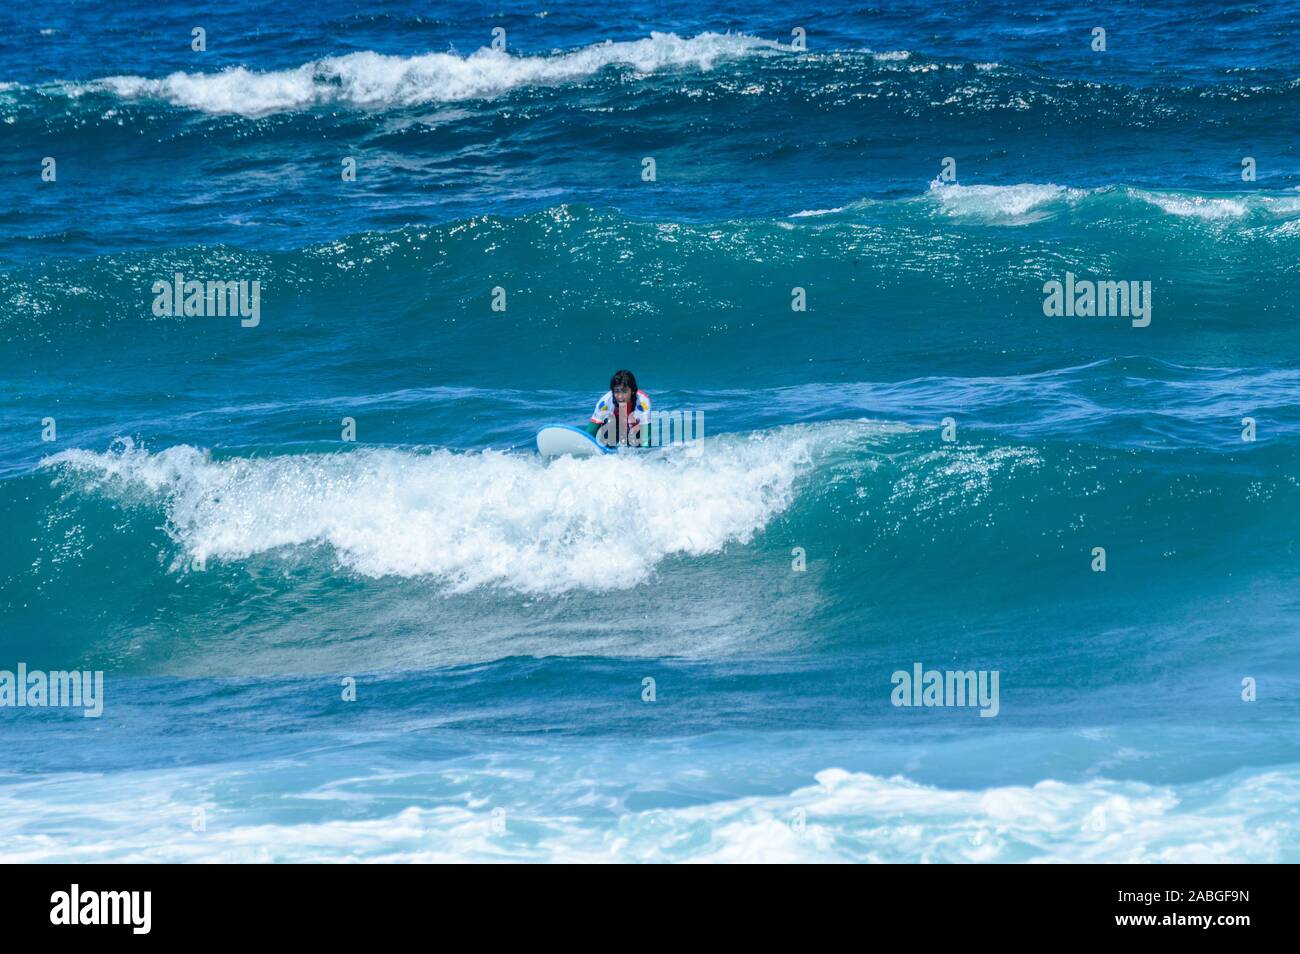 Long Haired Brunette Woman Catching Waves On Las Americas Beach. April 11, 2019. Santa Cruz De Tenerife Spain Africa. Travel Tourism Street Photograph Stock Photo